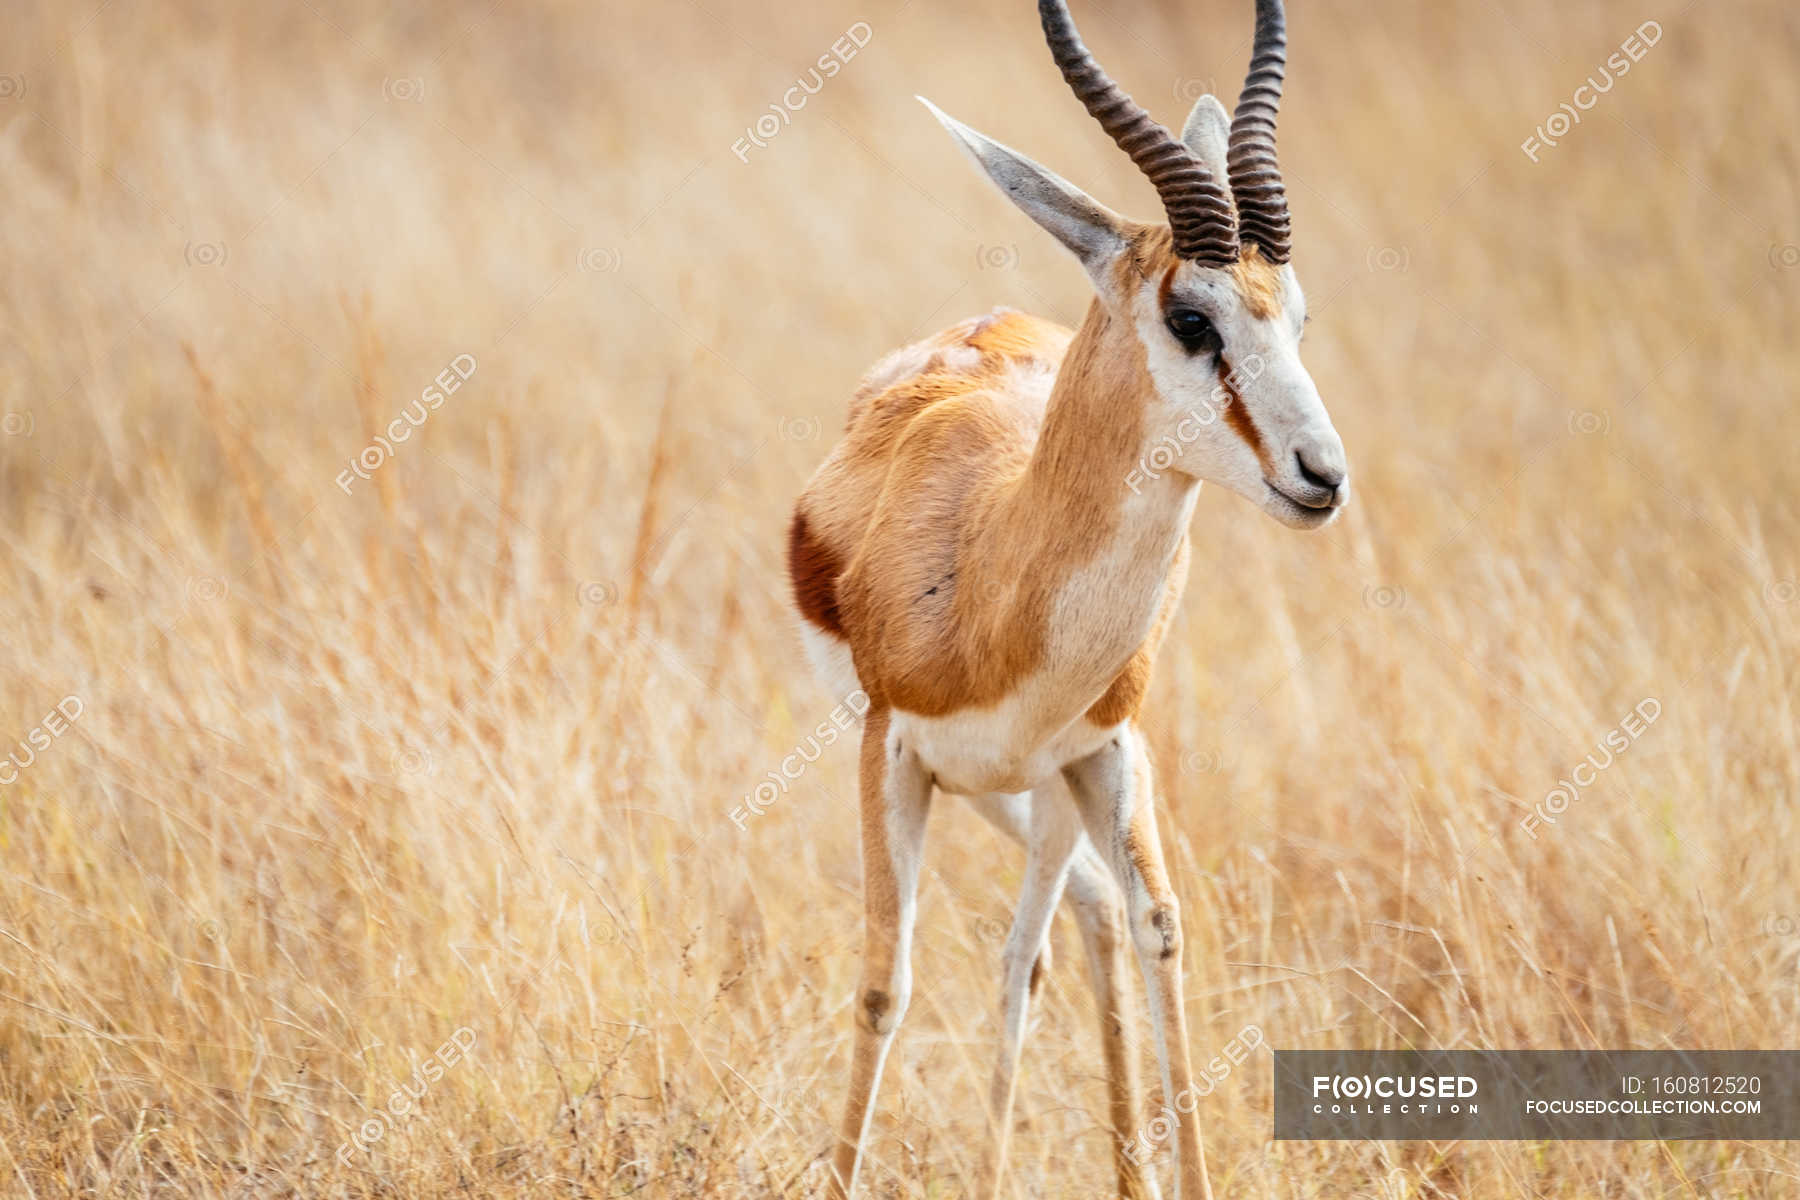 Antelope in wild, Africa — Stock Photo | #160812520